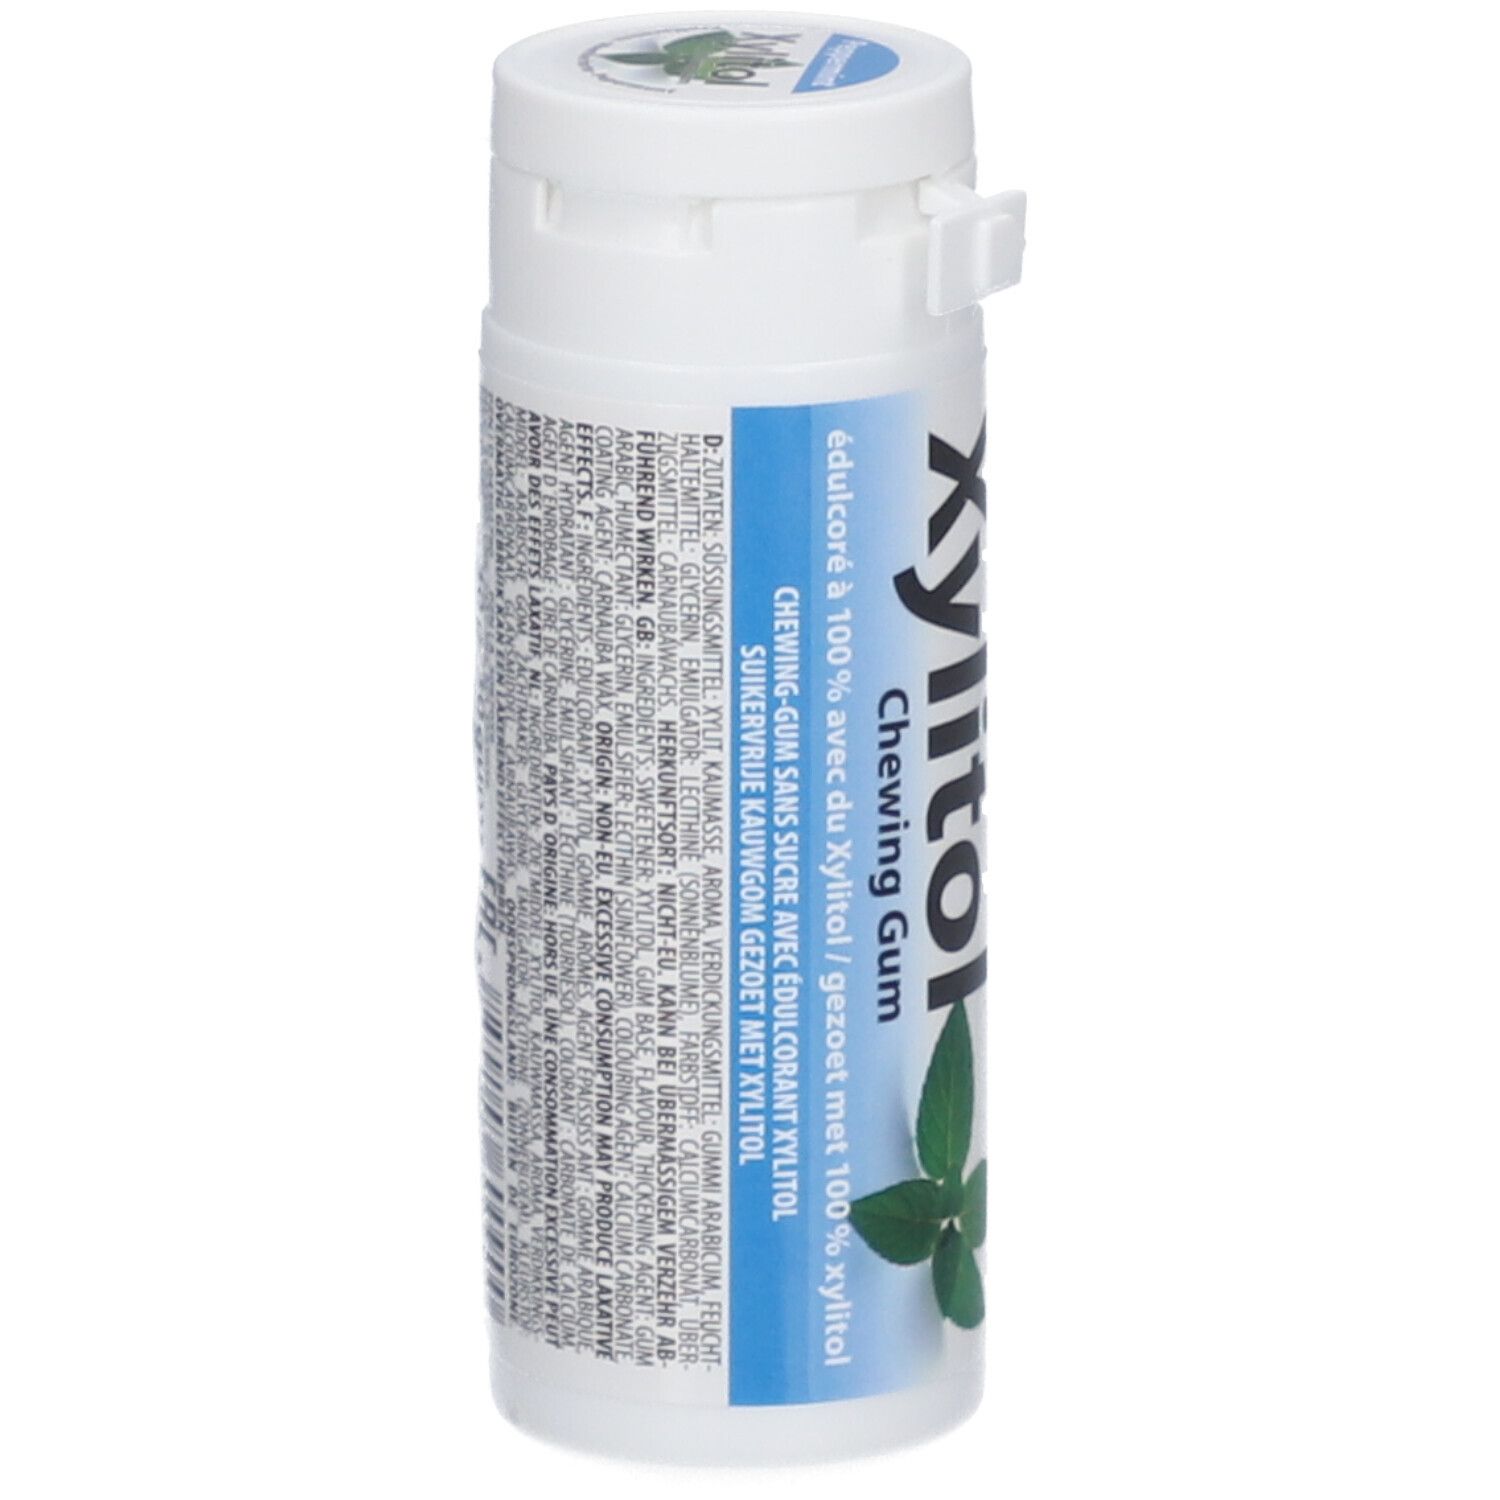 miradent Xylitol Chewing Gum Minze